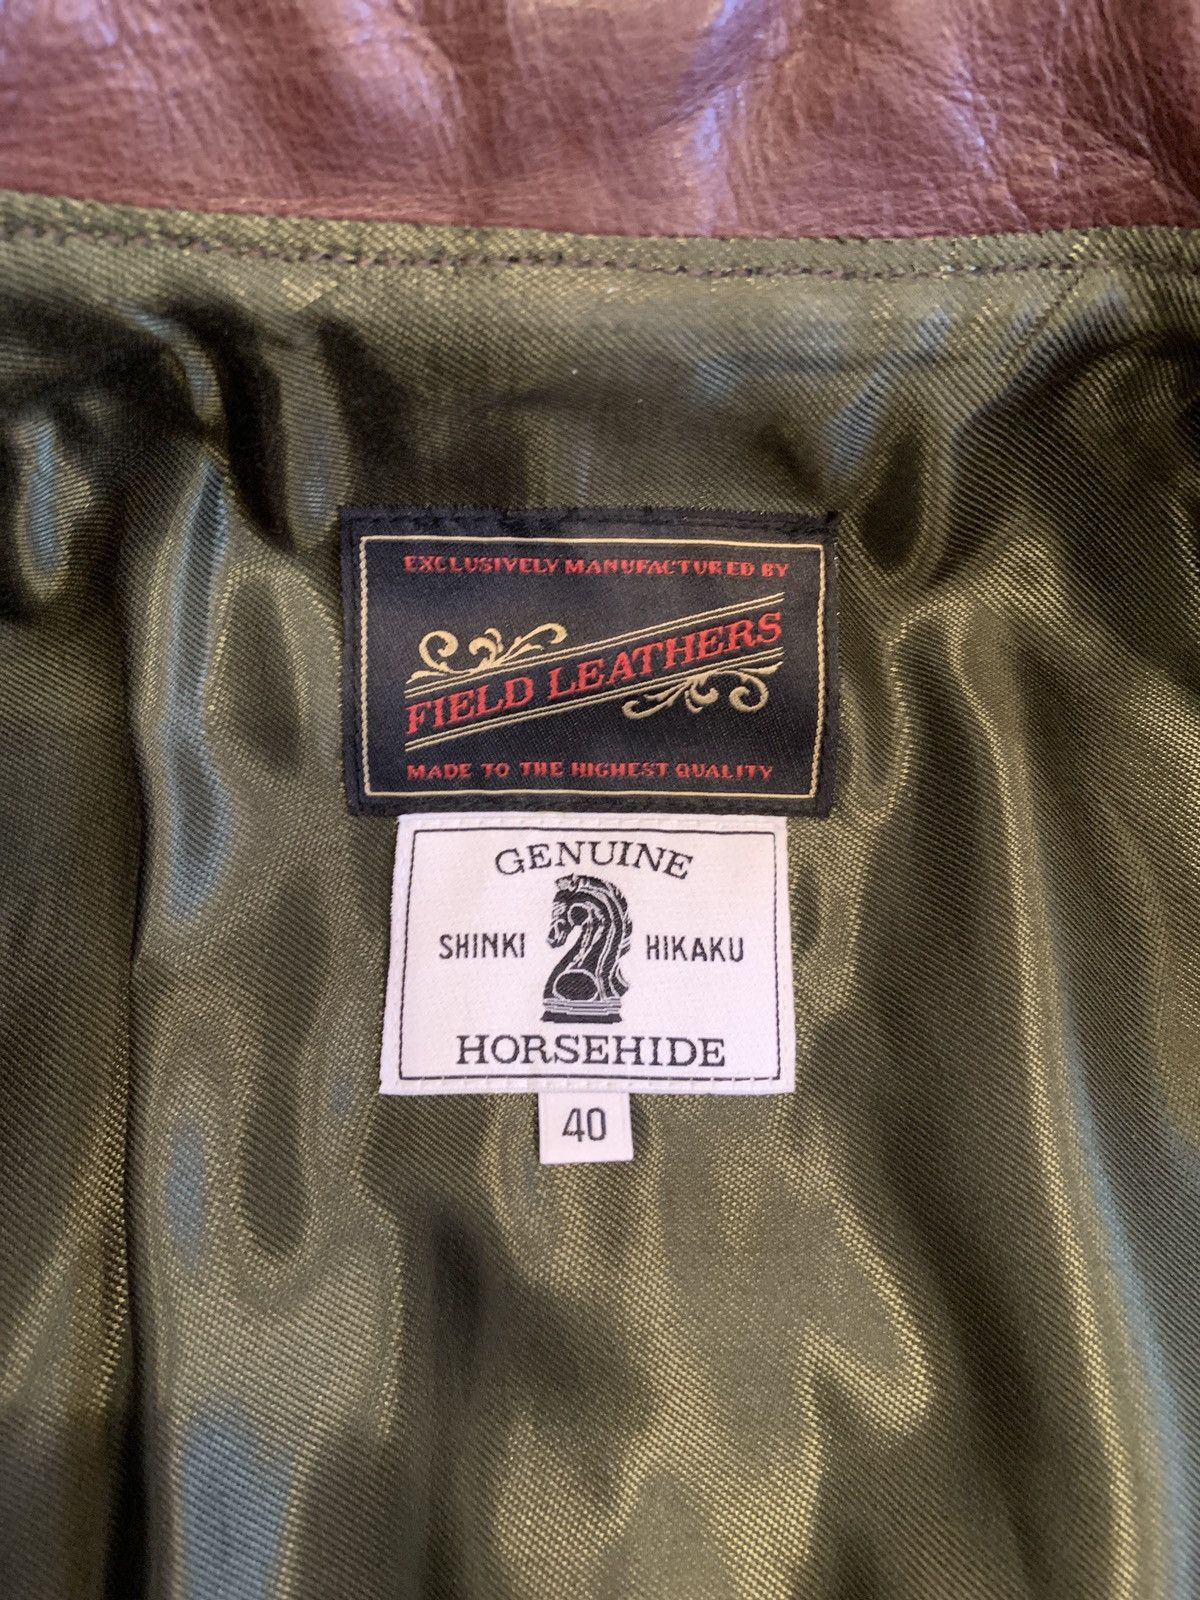 Custom Jacket Field Leathers Size 40 Horsehide Jacket Size US M / EU 48-50 / 2 - 4 Thumbnail